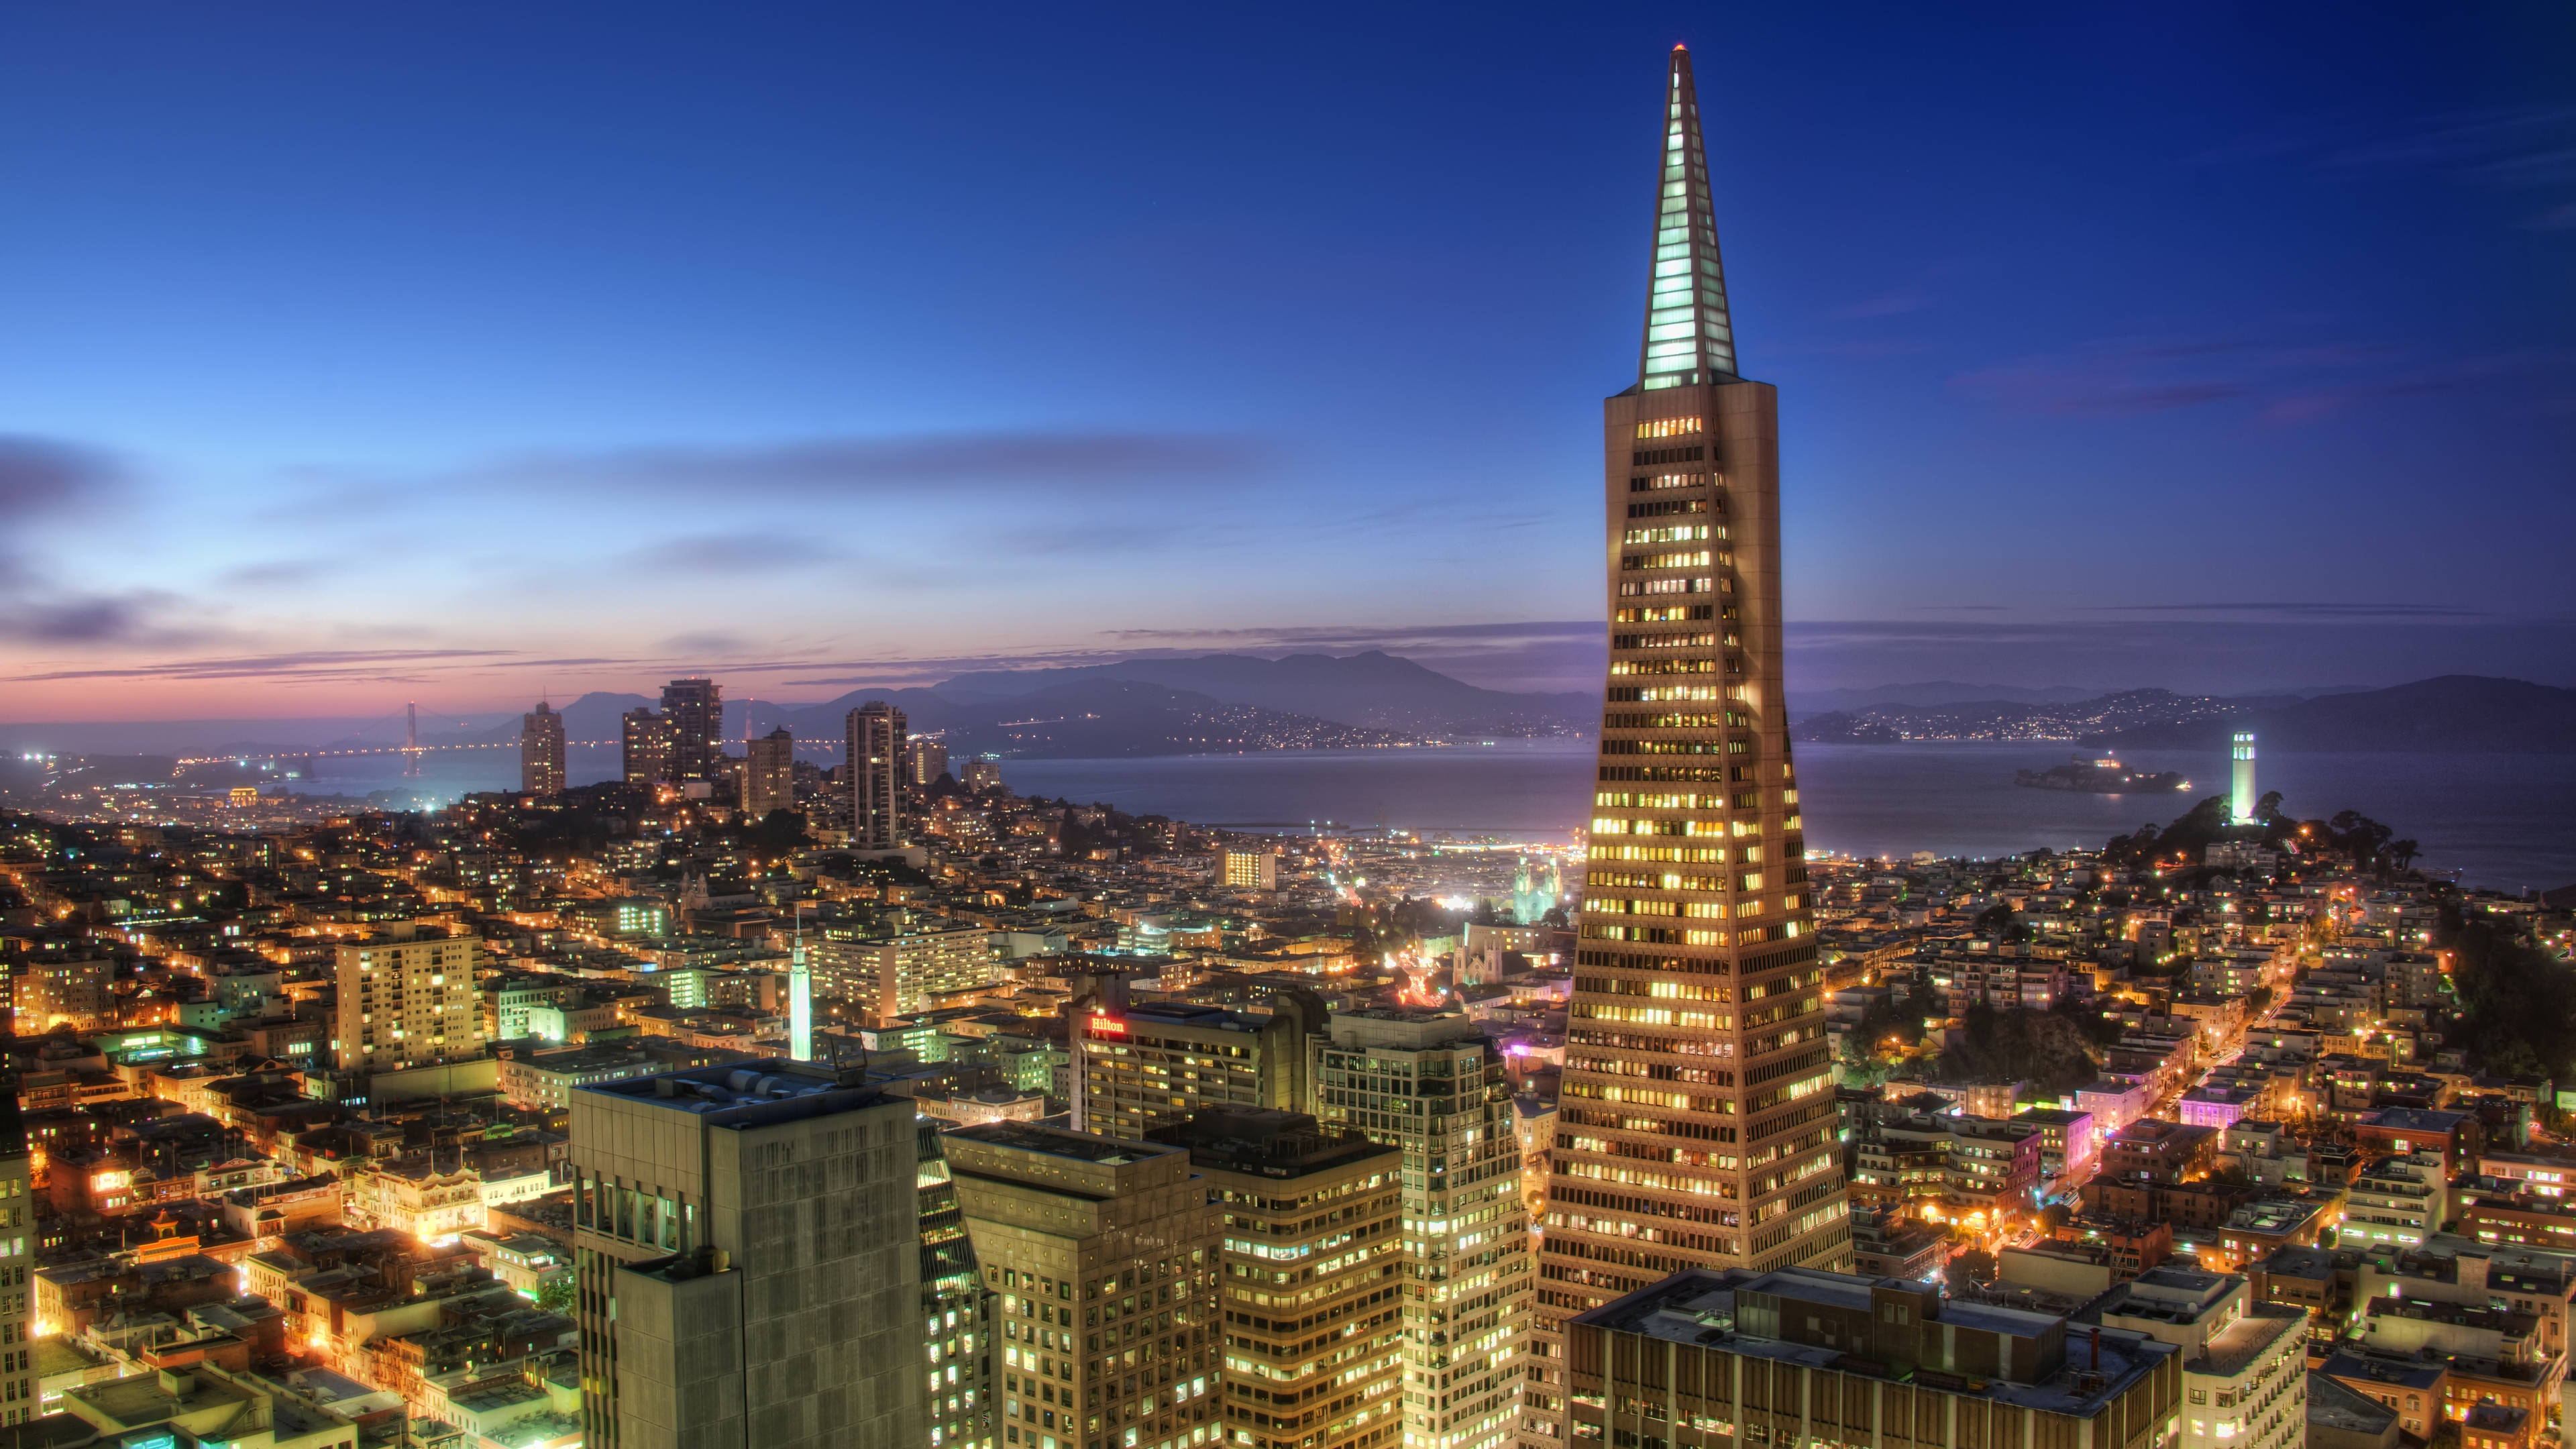 General 3840x2160 Trey Ratcliff 4K photography California city city lights cityscape building San Francisco tower